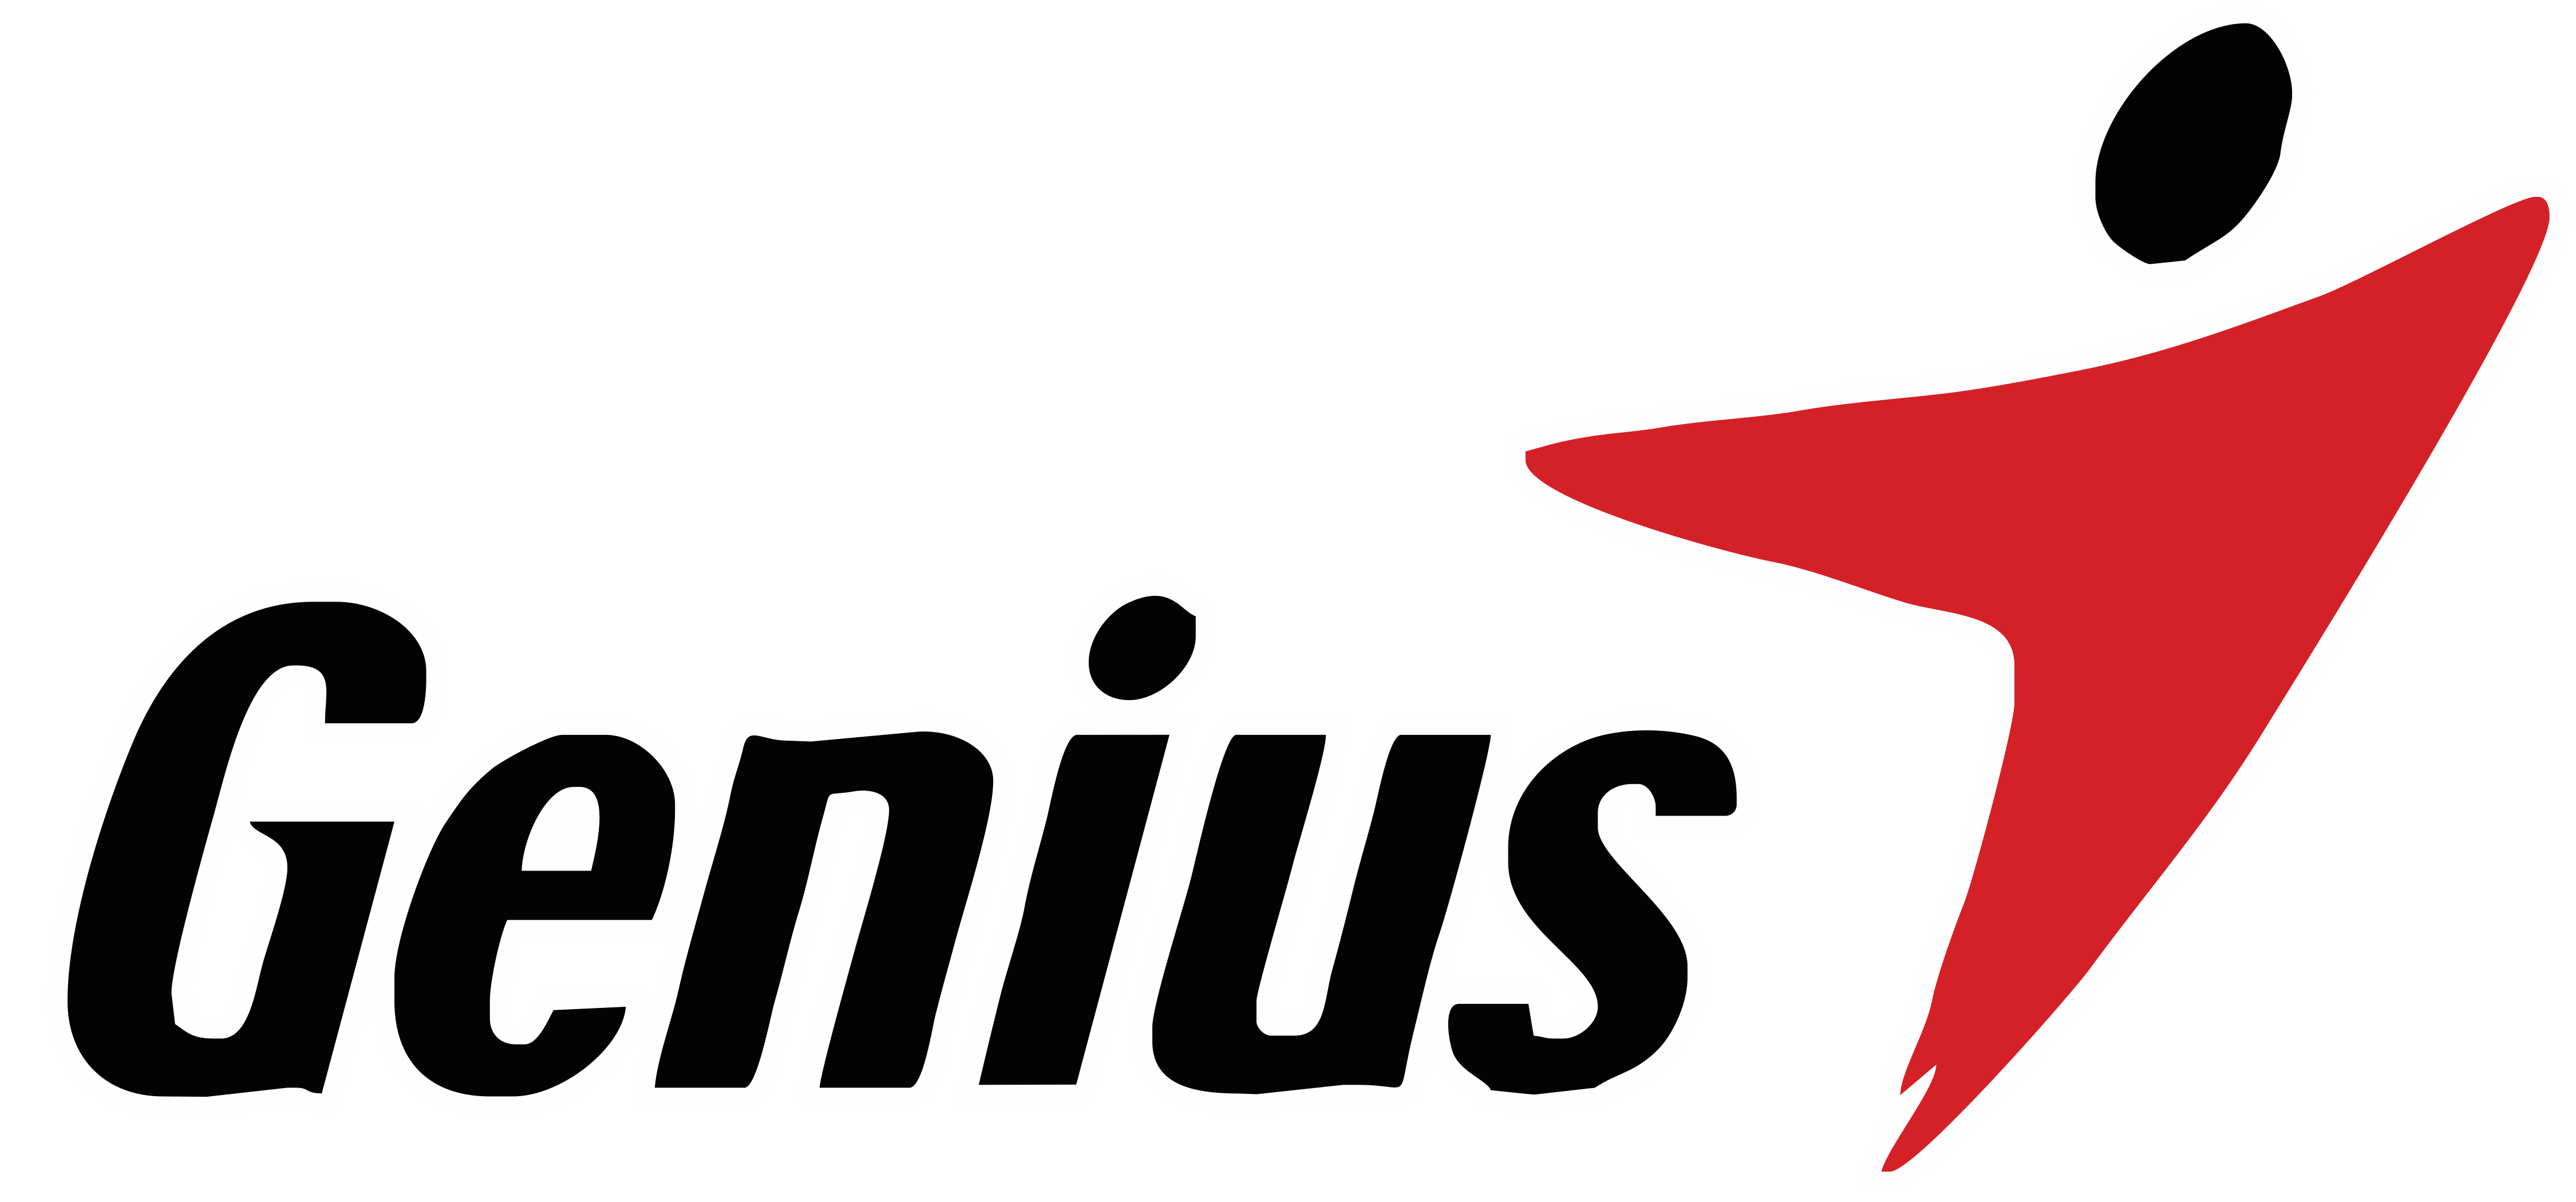 Genius – Logos Download